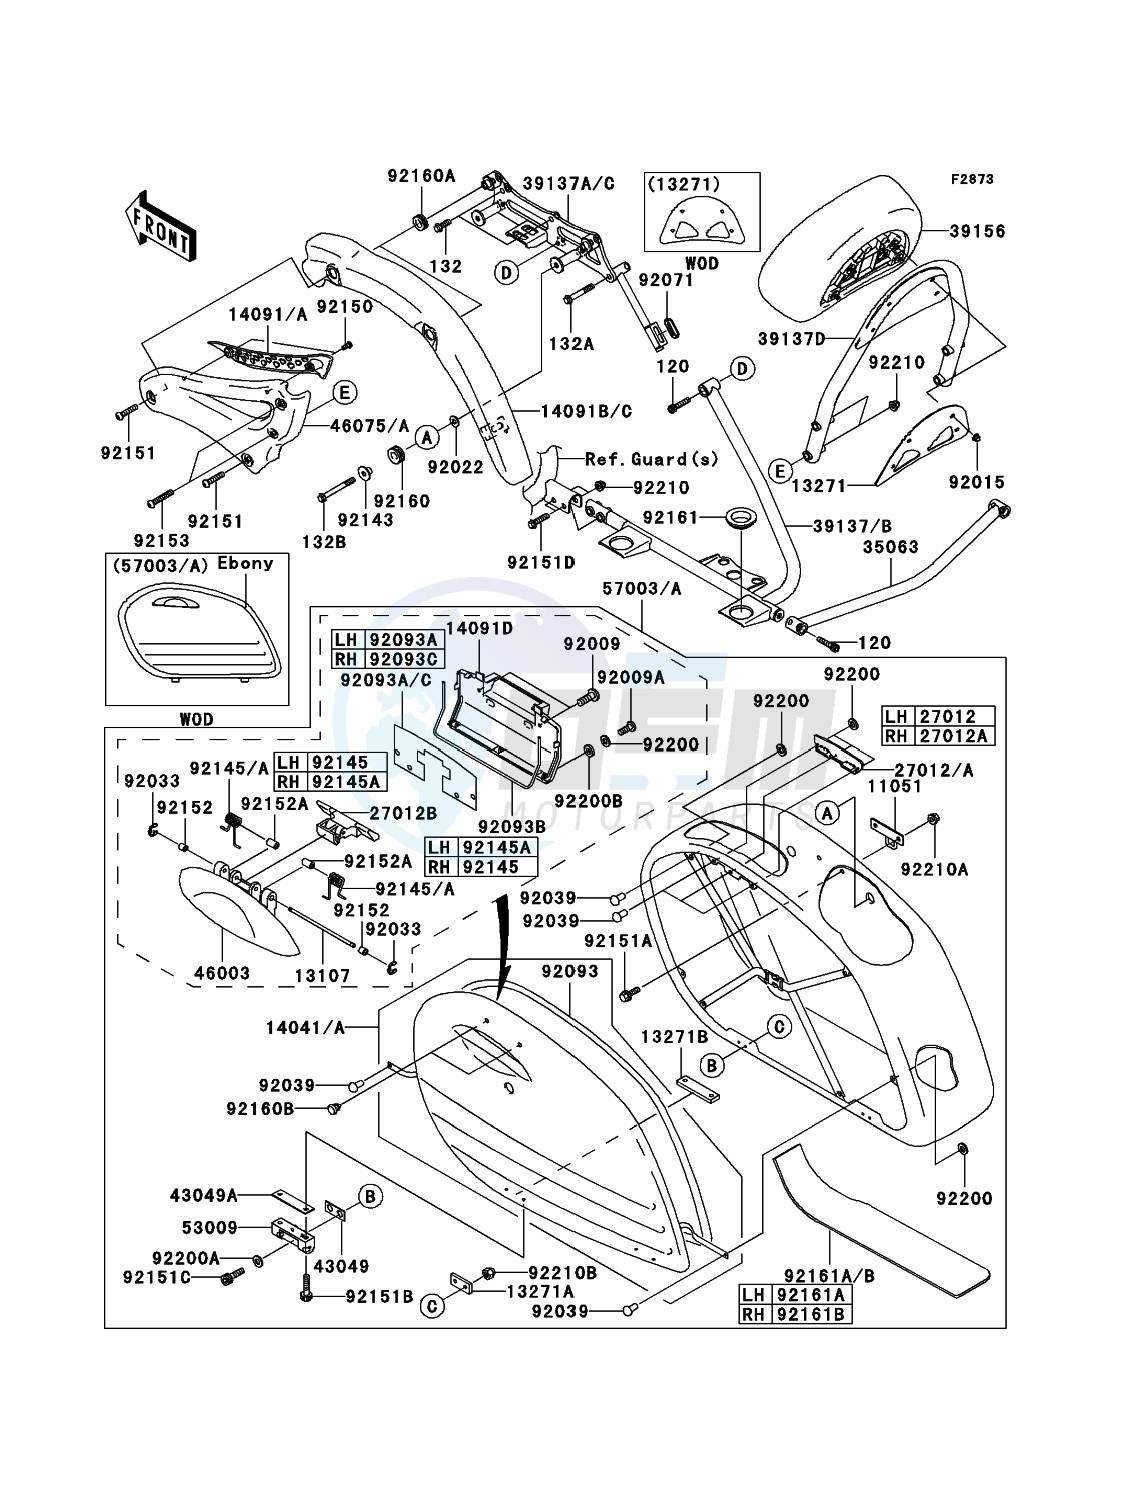 Saddlebags blueprint